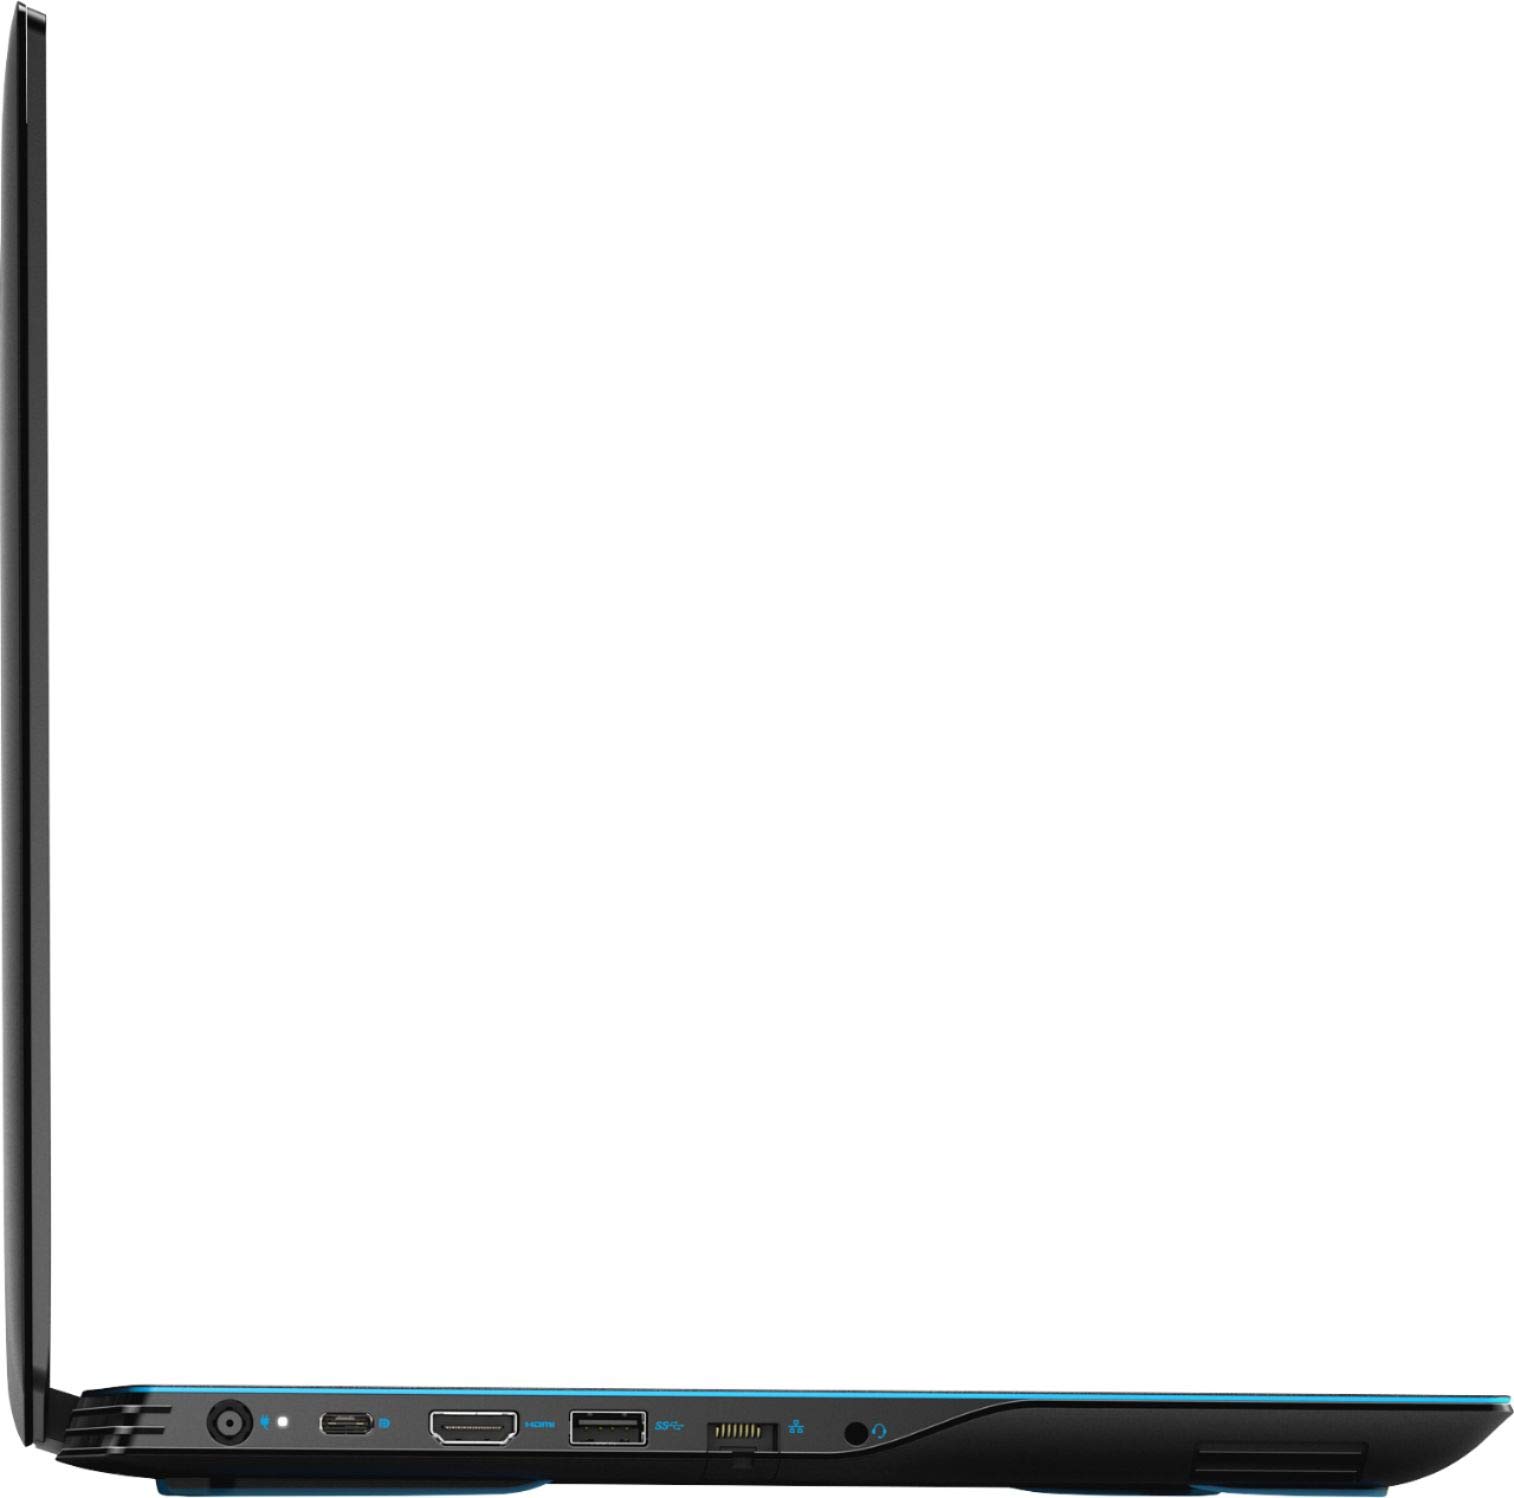 Dell - G3 15.6-inch Gaming Laptop - Intel Core i7 9750H - 16GB Memory - NVIDIA GeForce GTX 1660Ti - 512GB SSD. Windows 10 (Renewed)